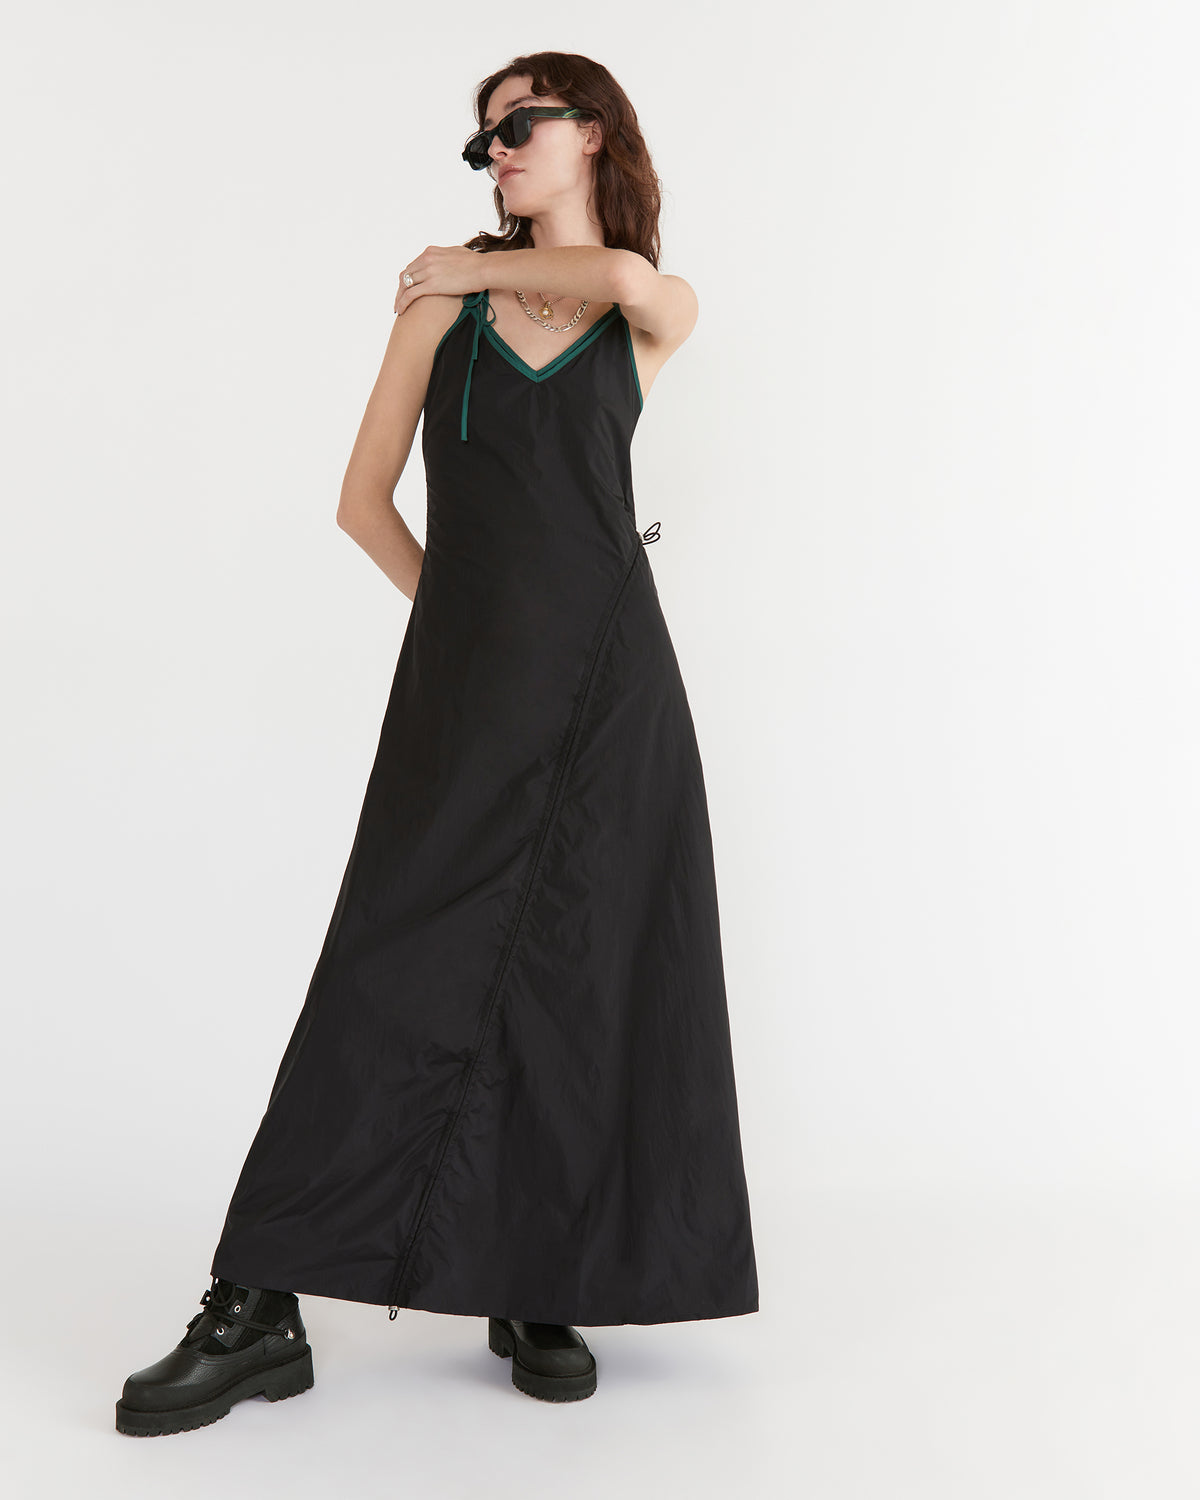 Cinched Nylon Asymmetrical Dress in Black